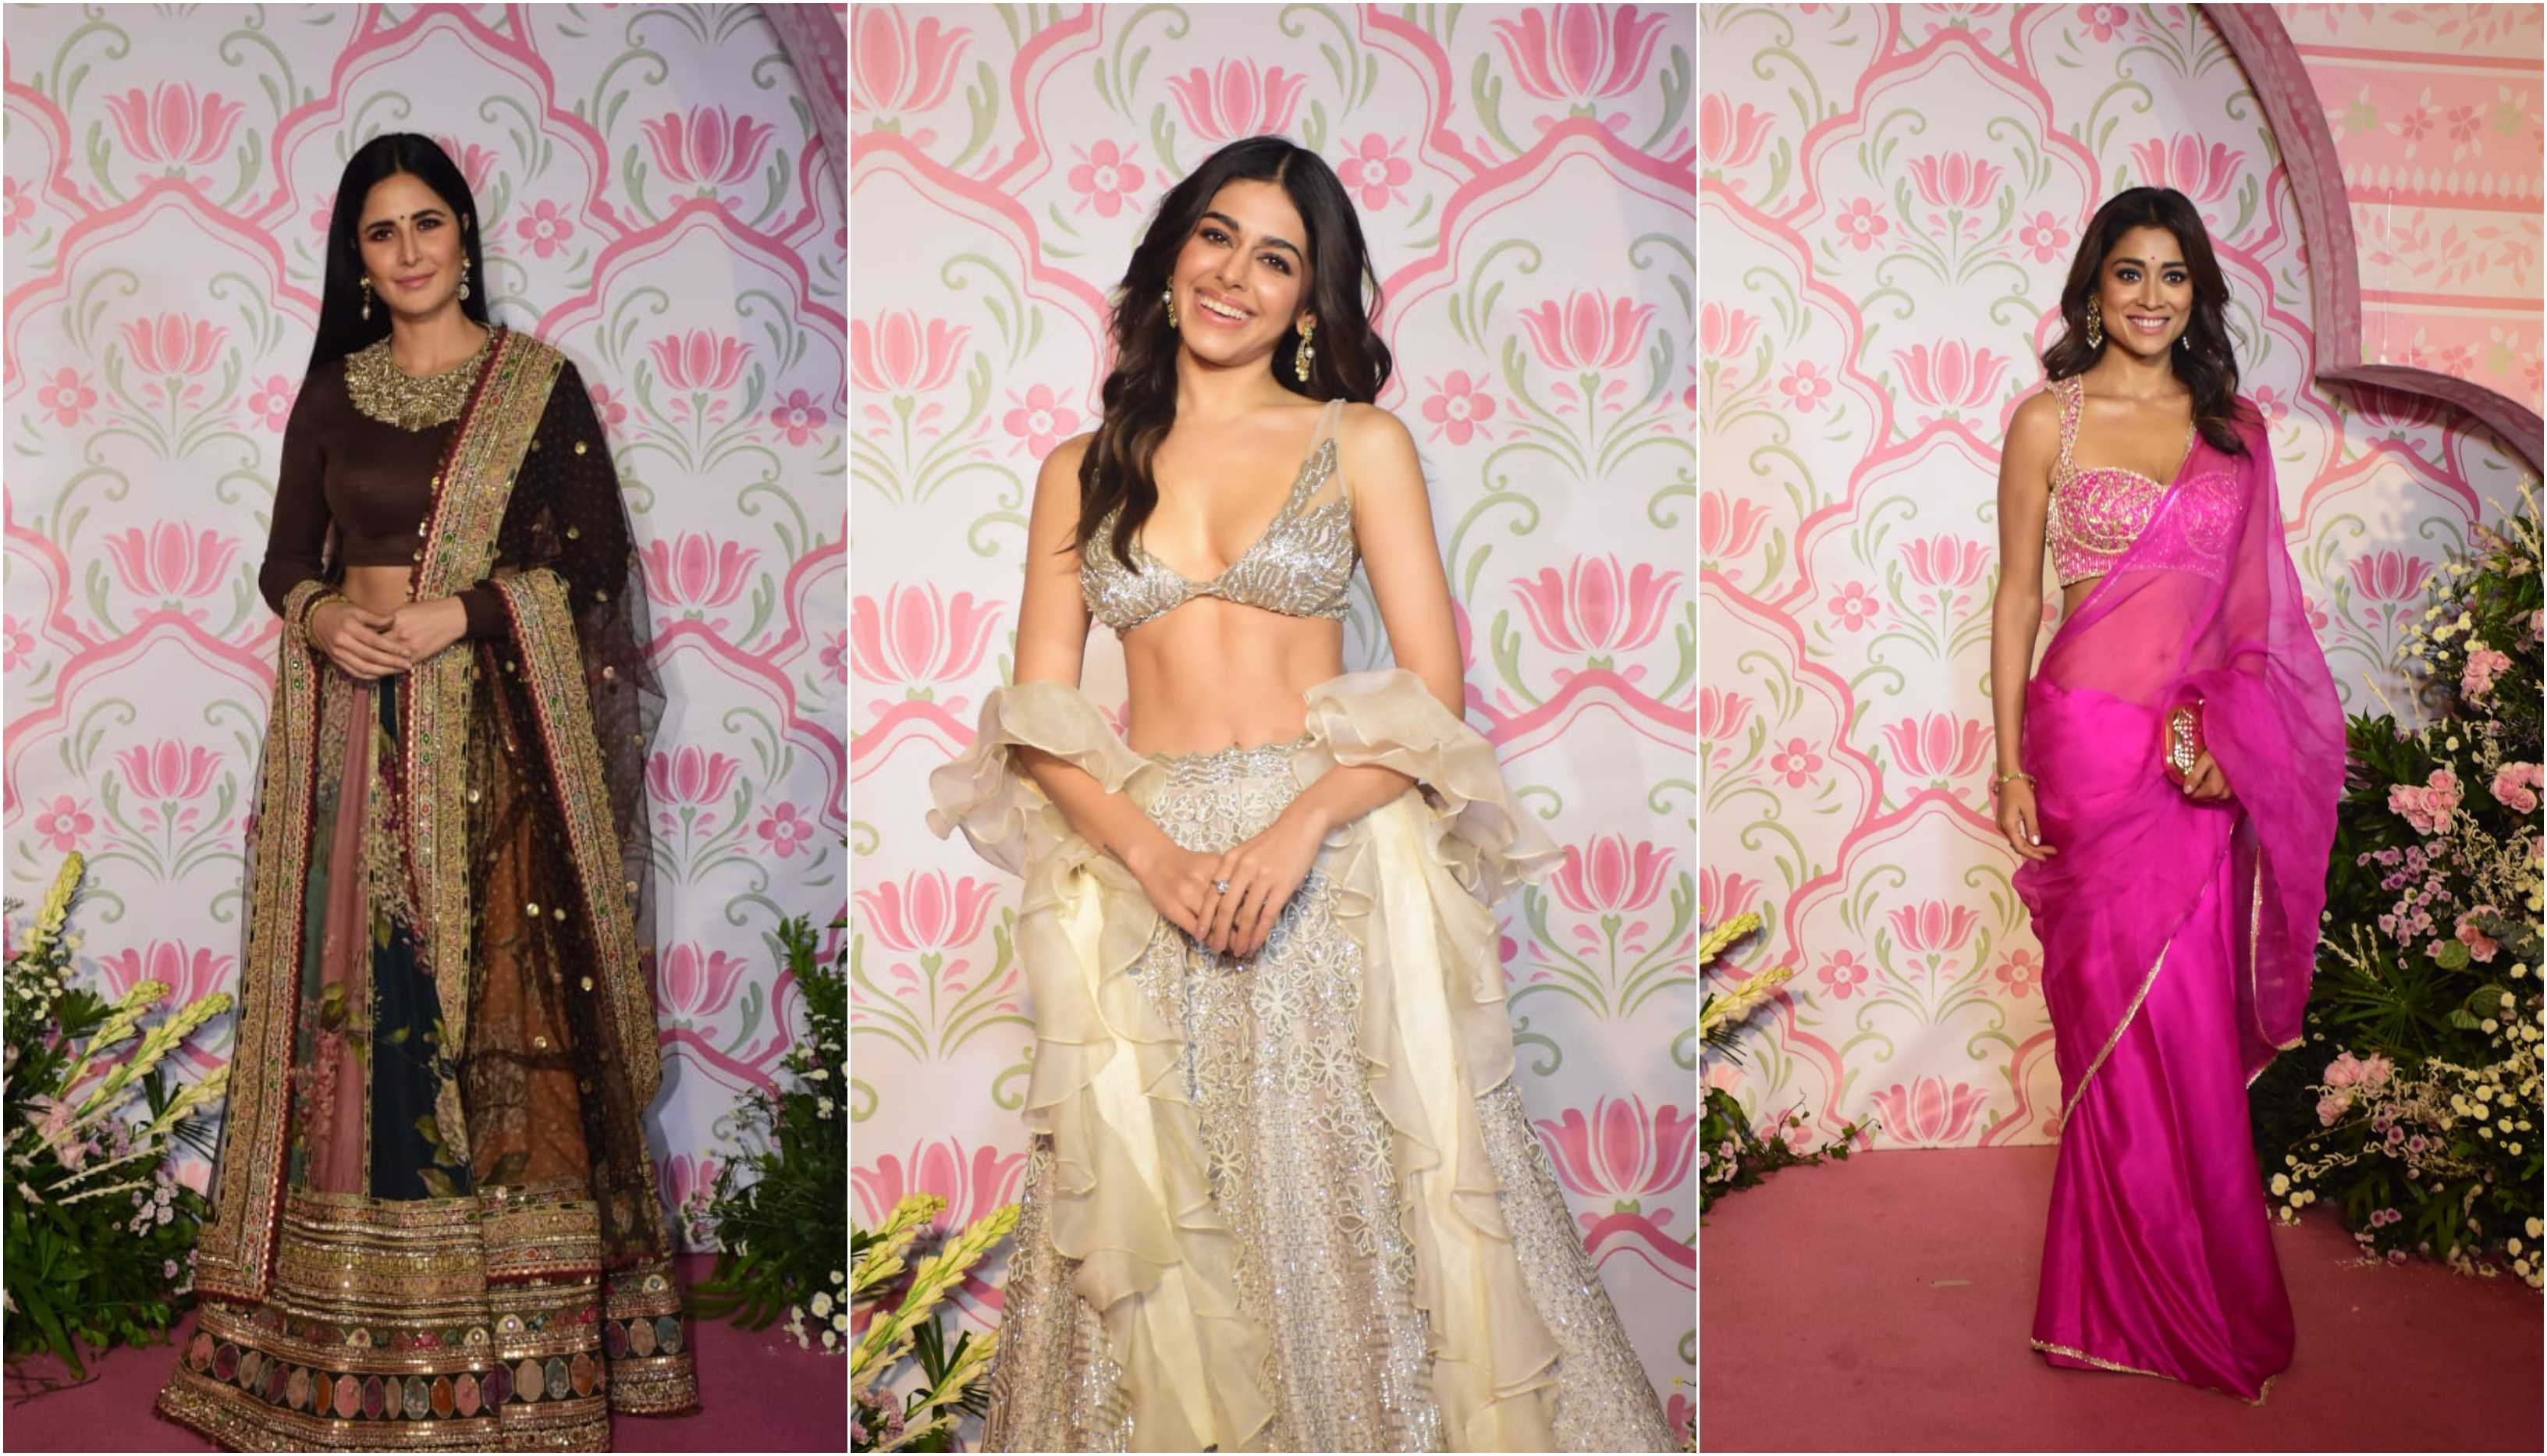 Katrina Kaif, Salman Khan and other Bollywood celebs light up the night at Ramesh Taurani's Diwali bash